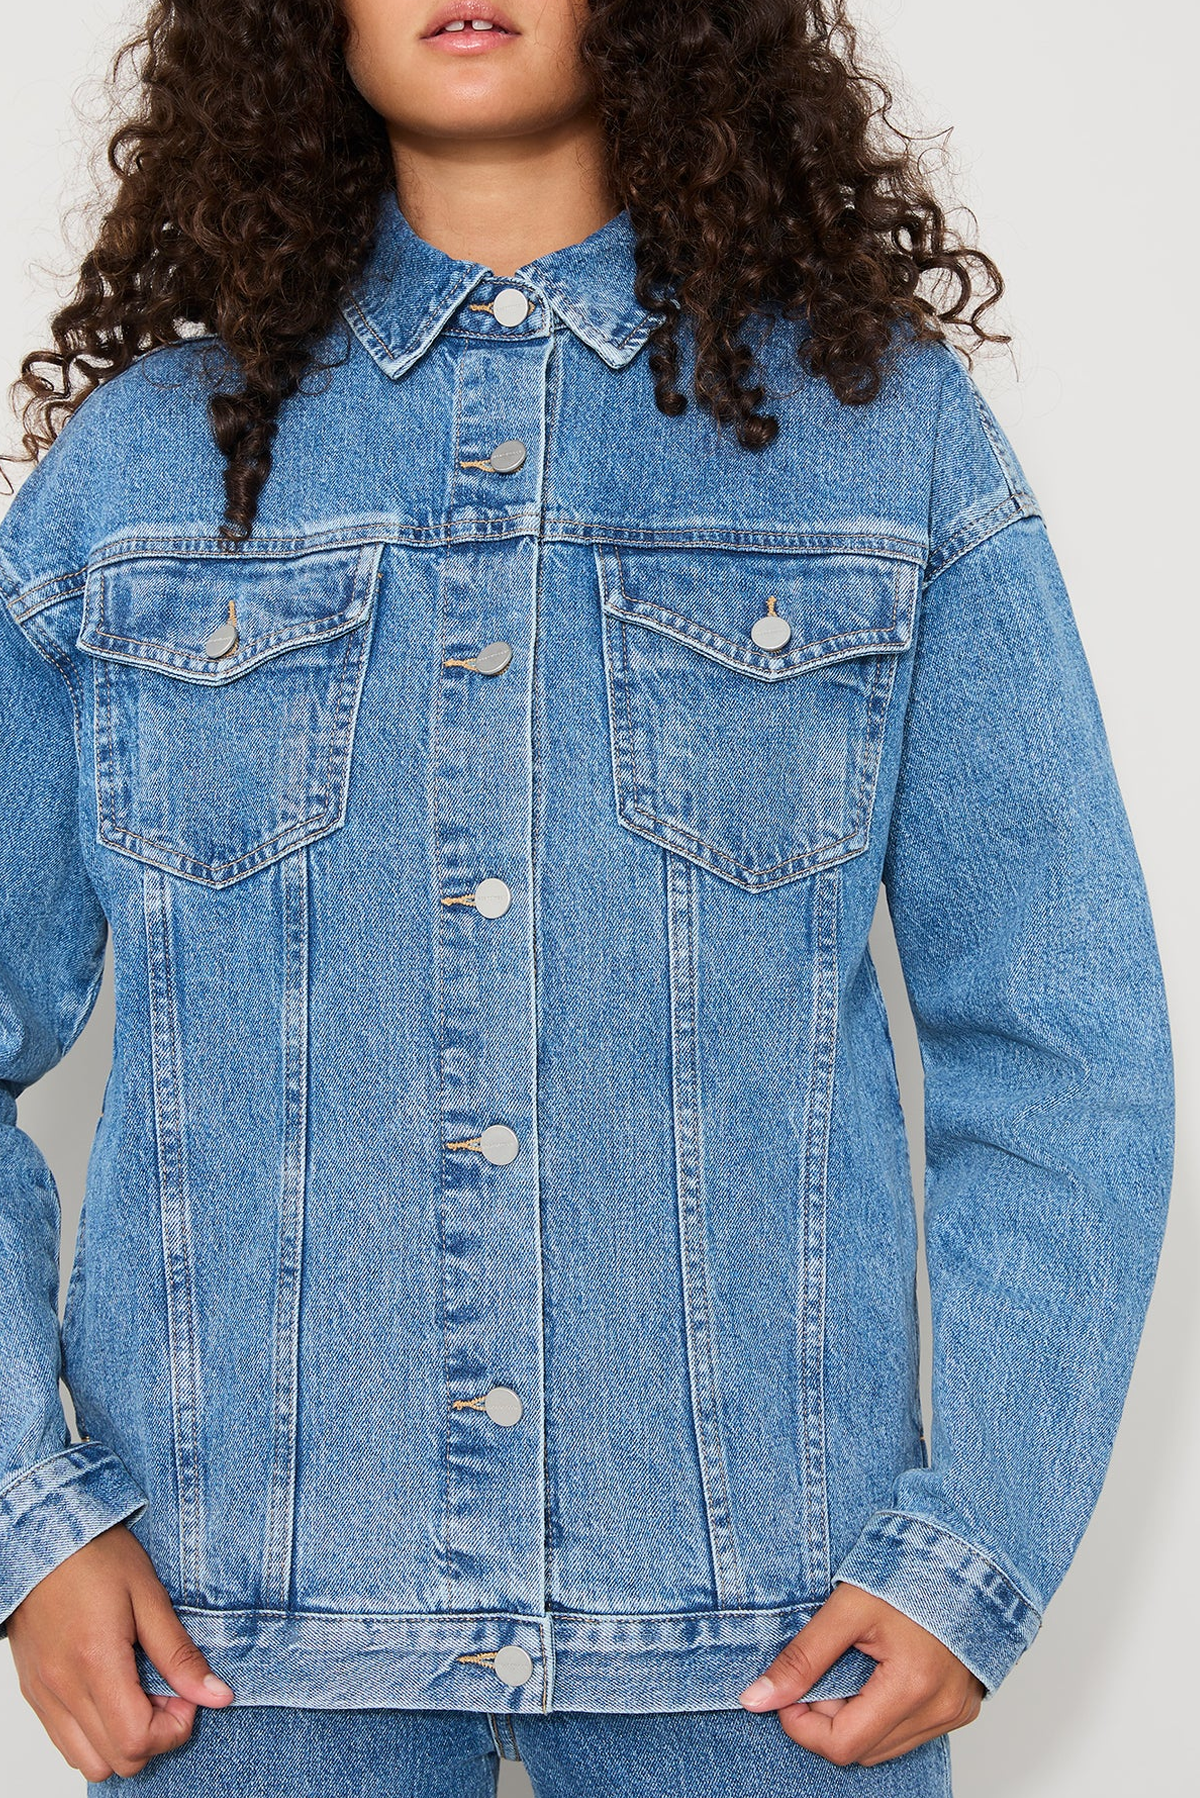 Styling and Accessorizing Your Denim Jacket | Brooklyn Cloth Blog